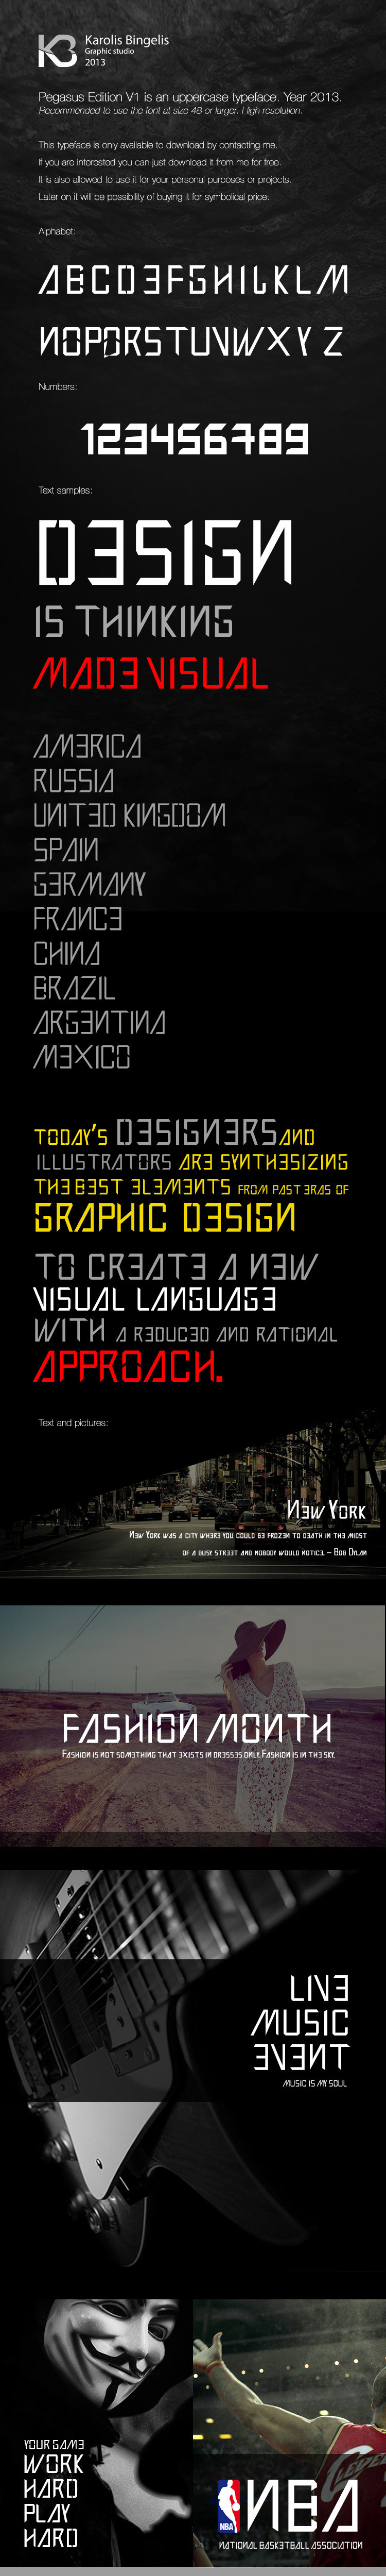 font Typeface type letter logo Free font free design graphic Web